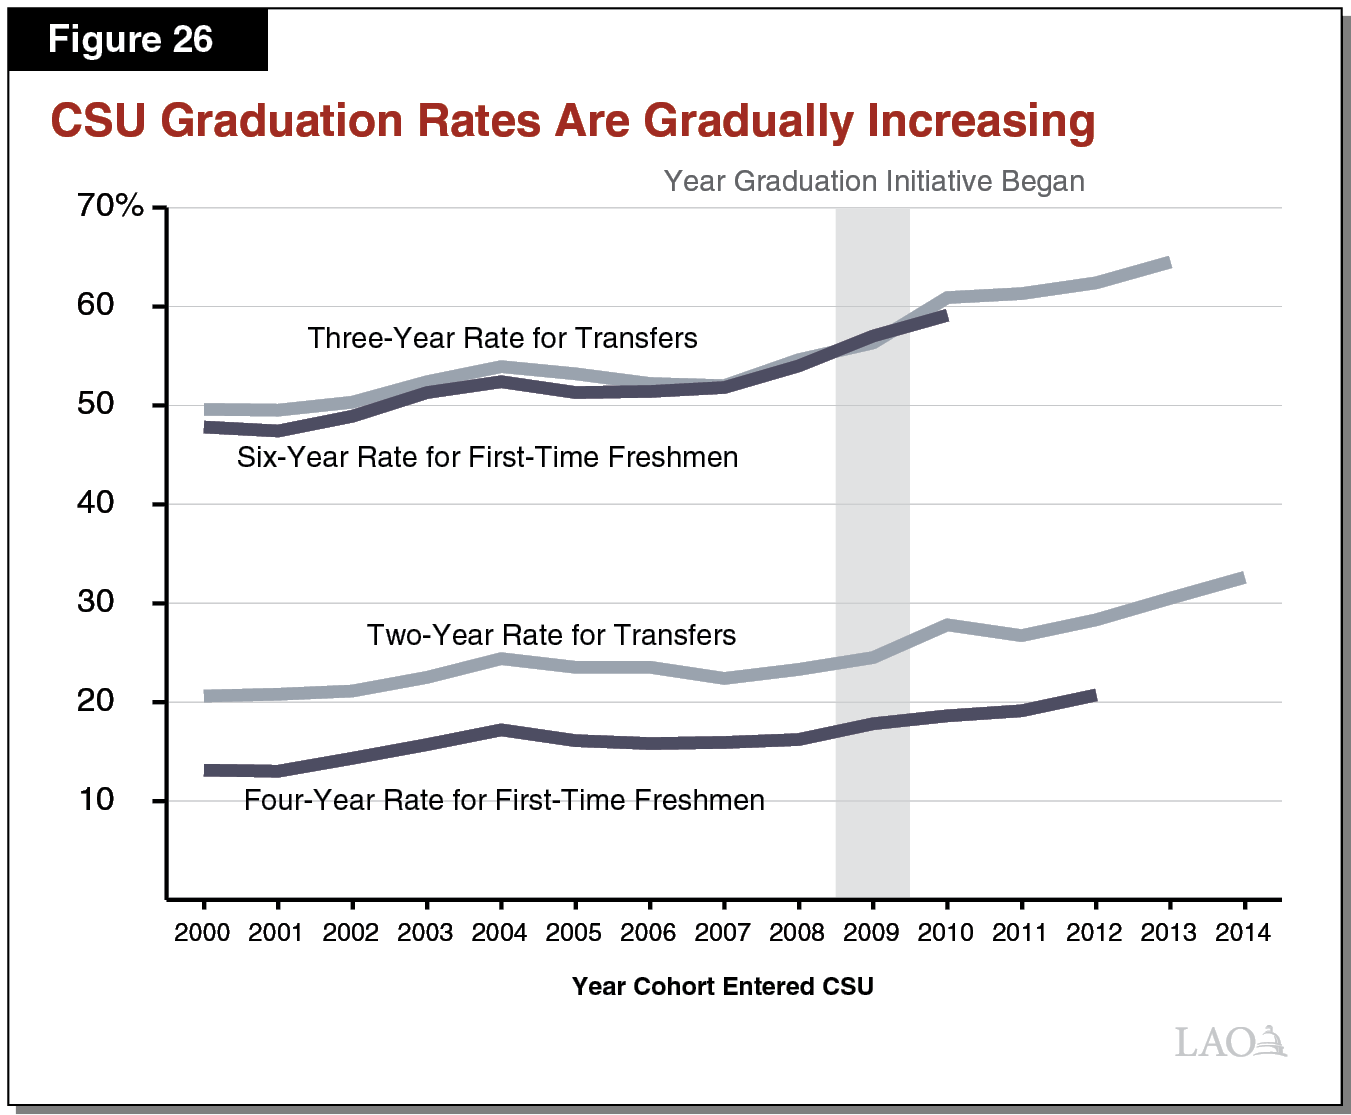 Figure 26 - CSU Graduation Rates are Gradualy Increasing